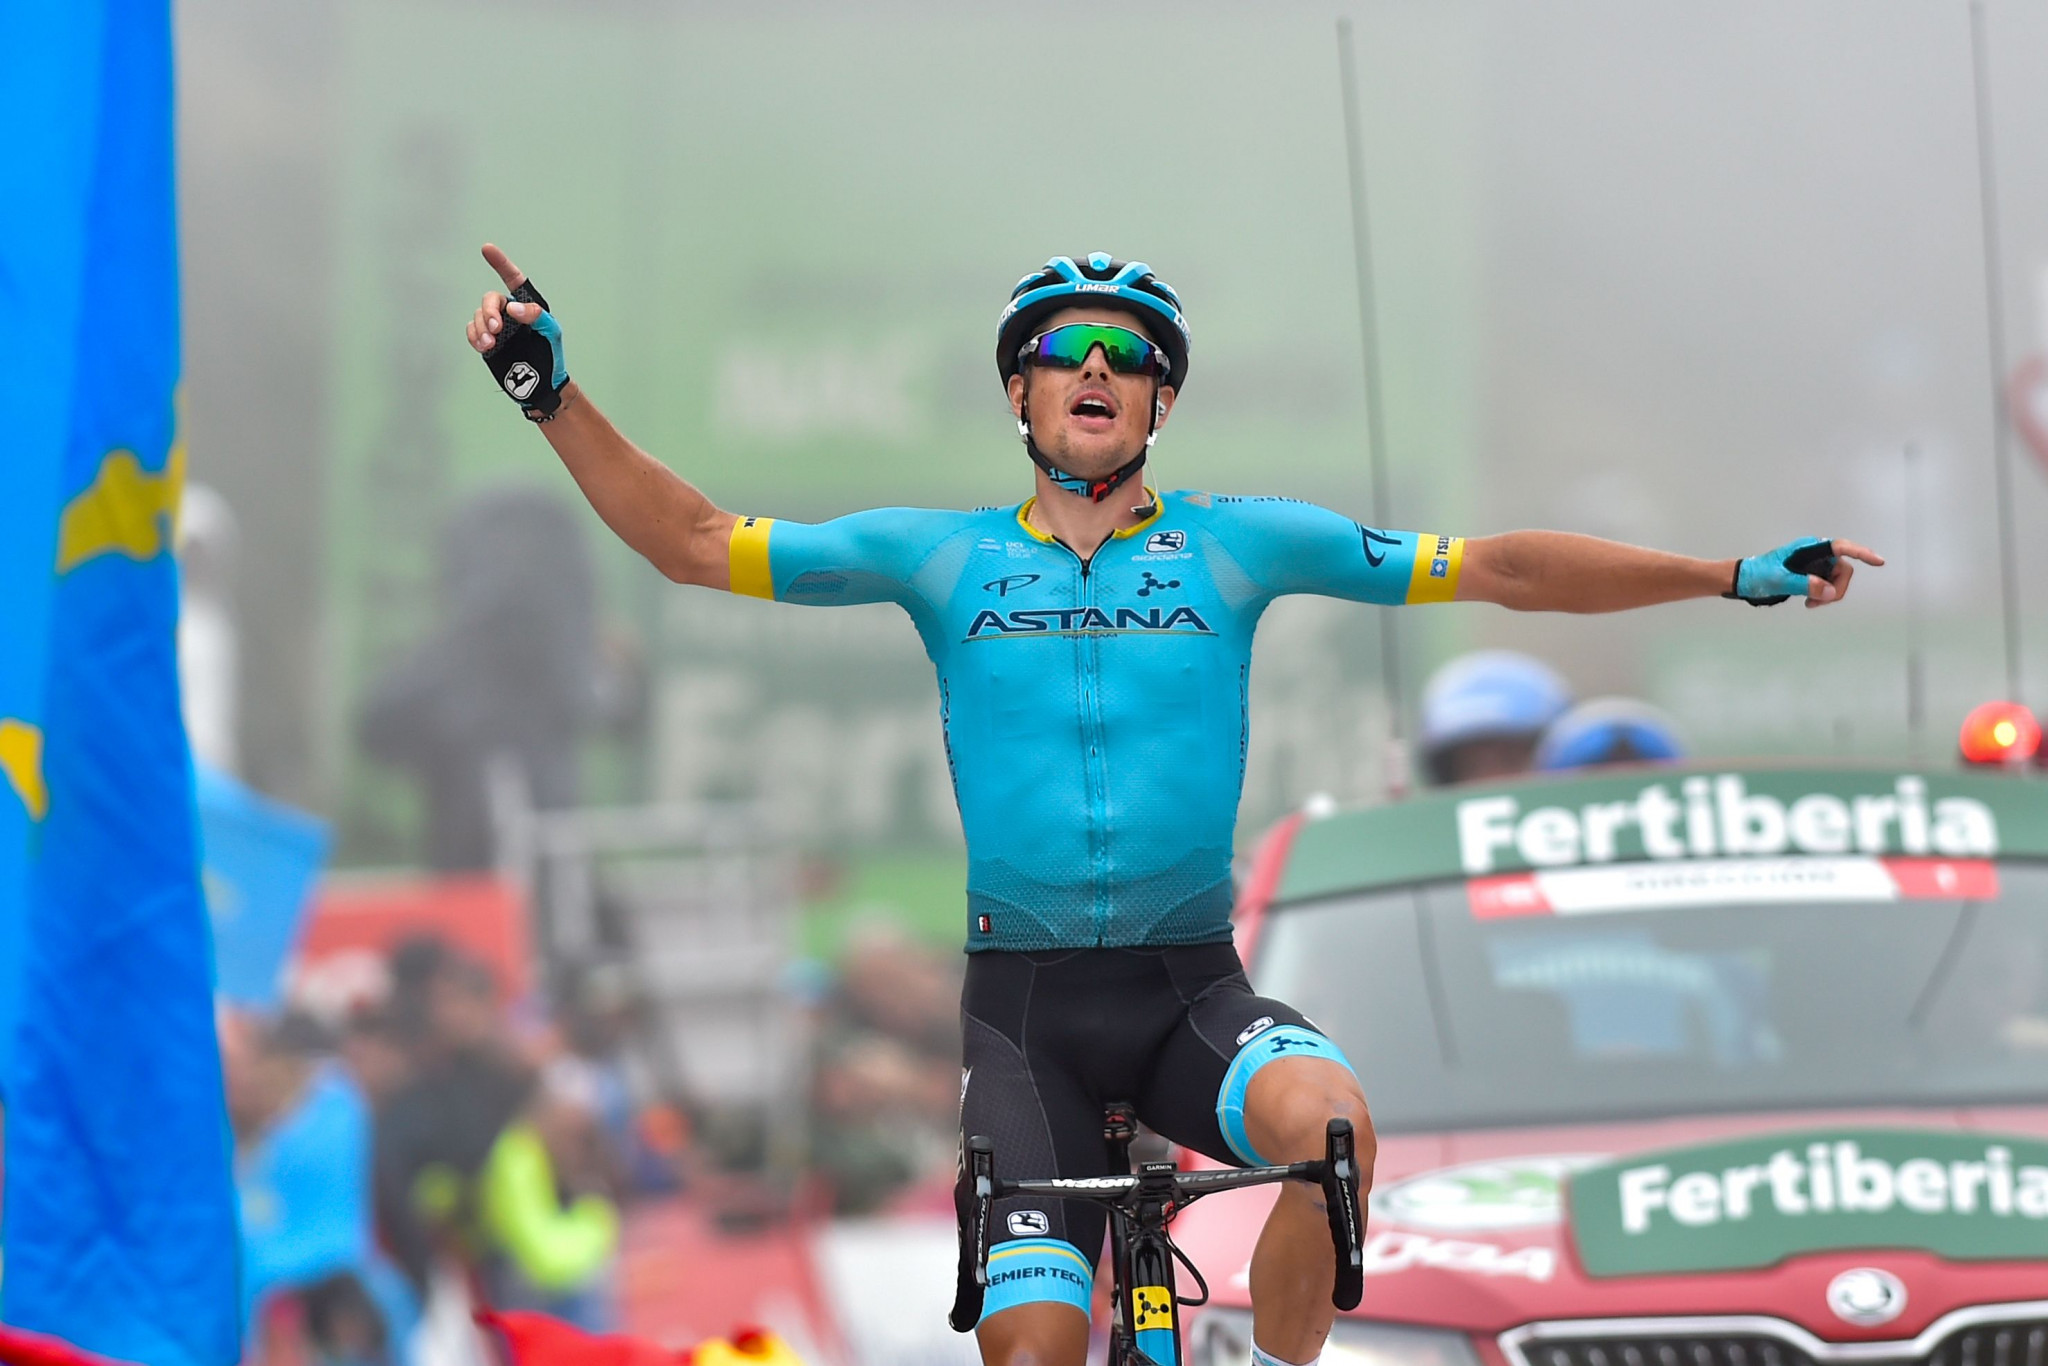 Fuglsang claims maiden Grand Tour victory as Roglič extends lead at Vuelta a España